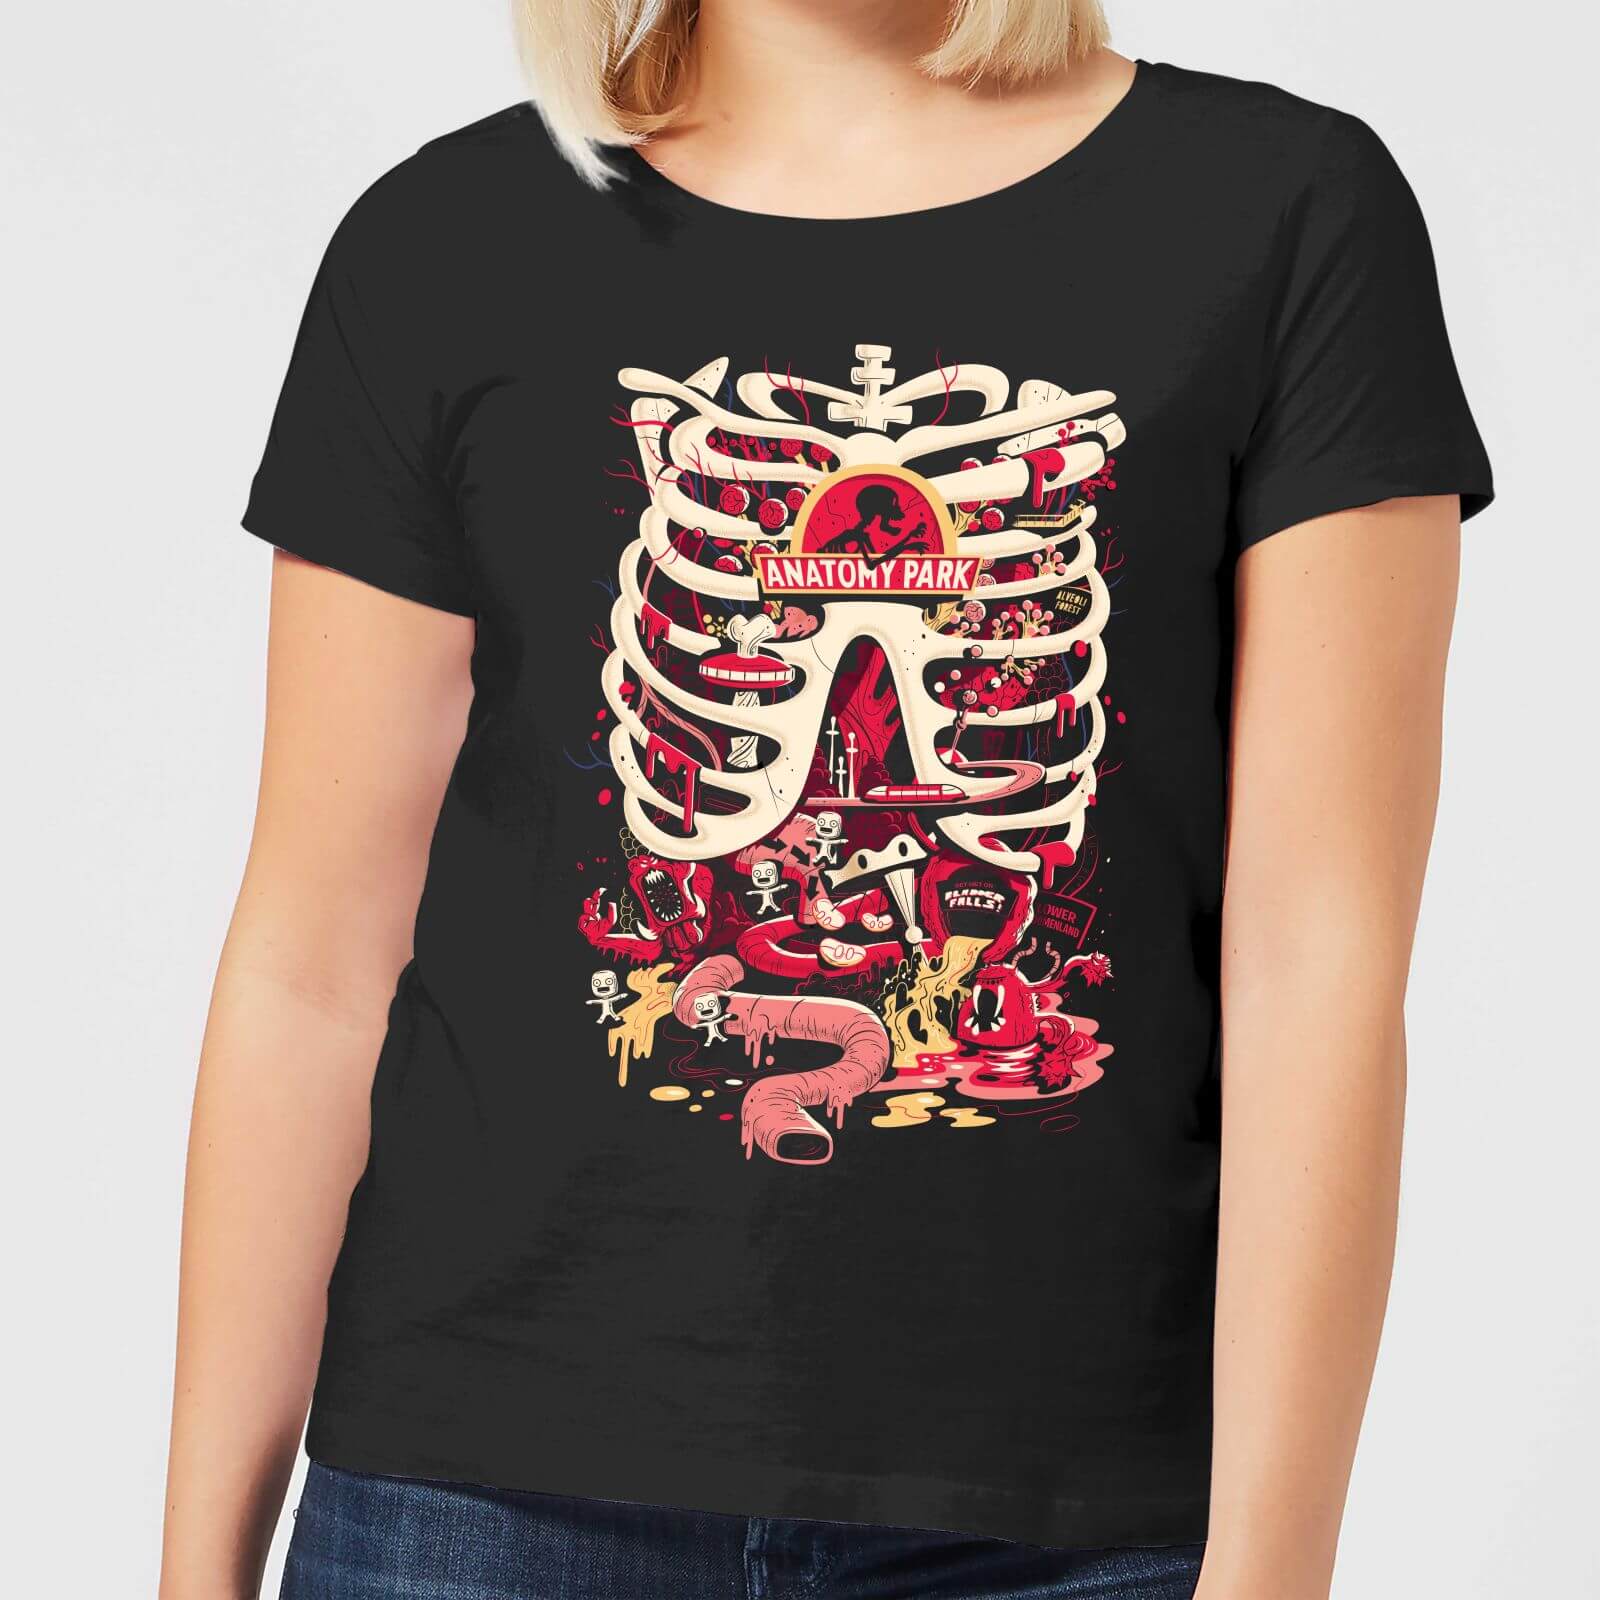 Rick and Morty Anatomy Park Women's T-Shirt - Black - XL